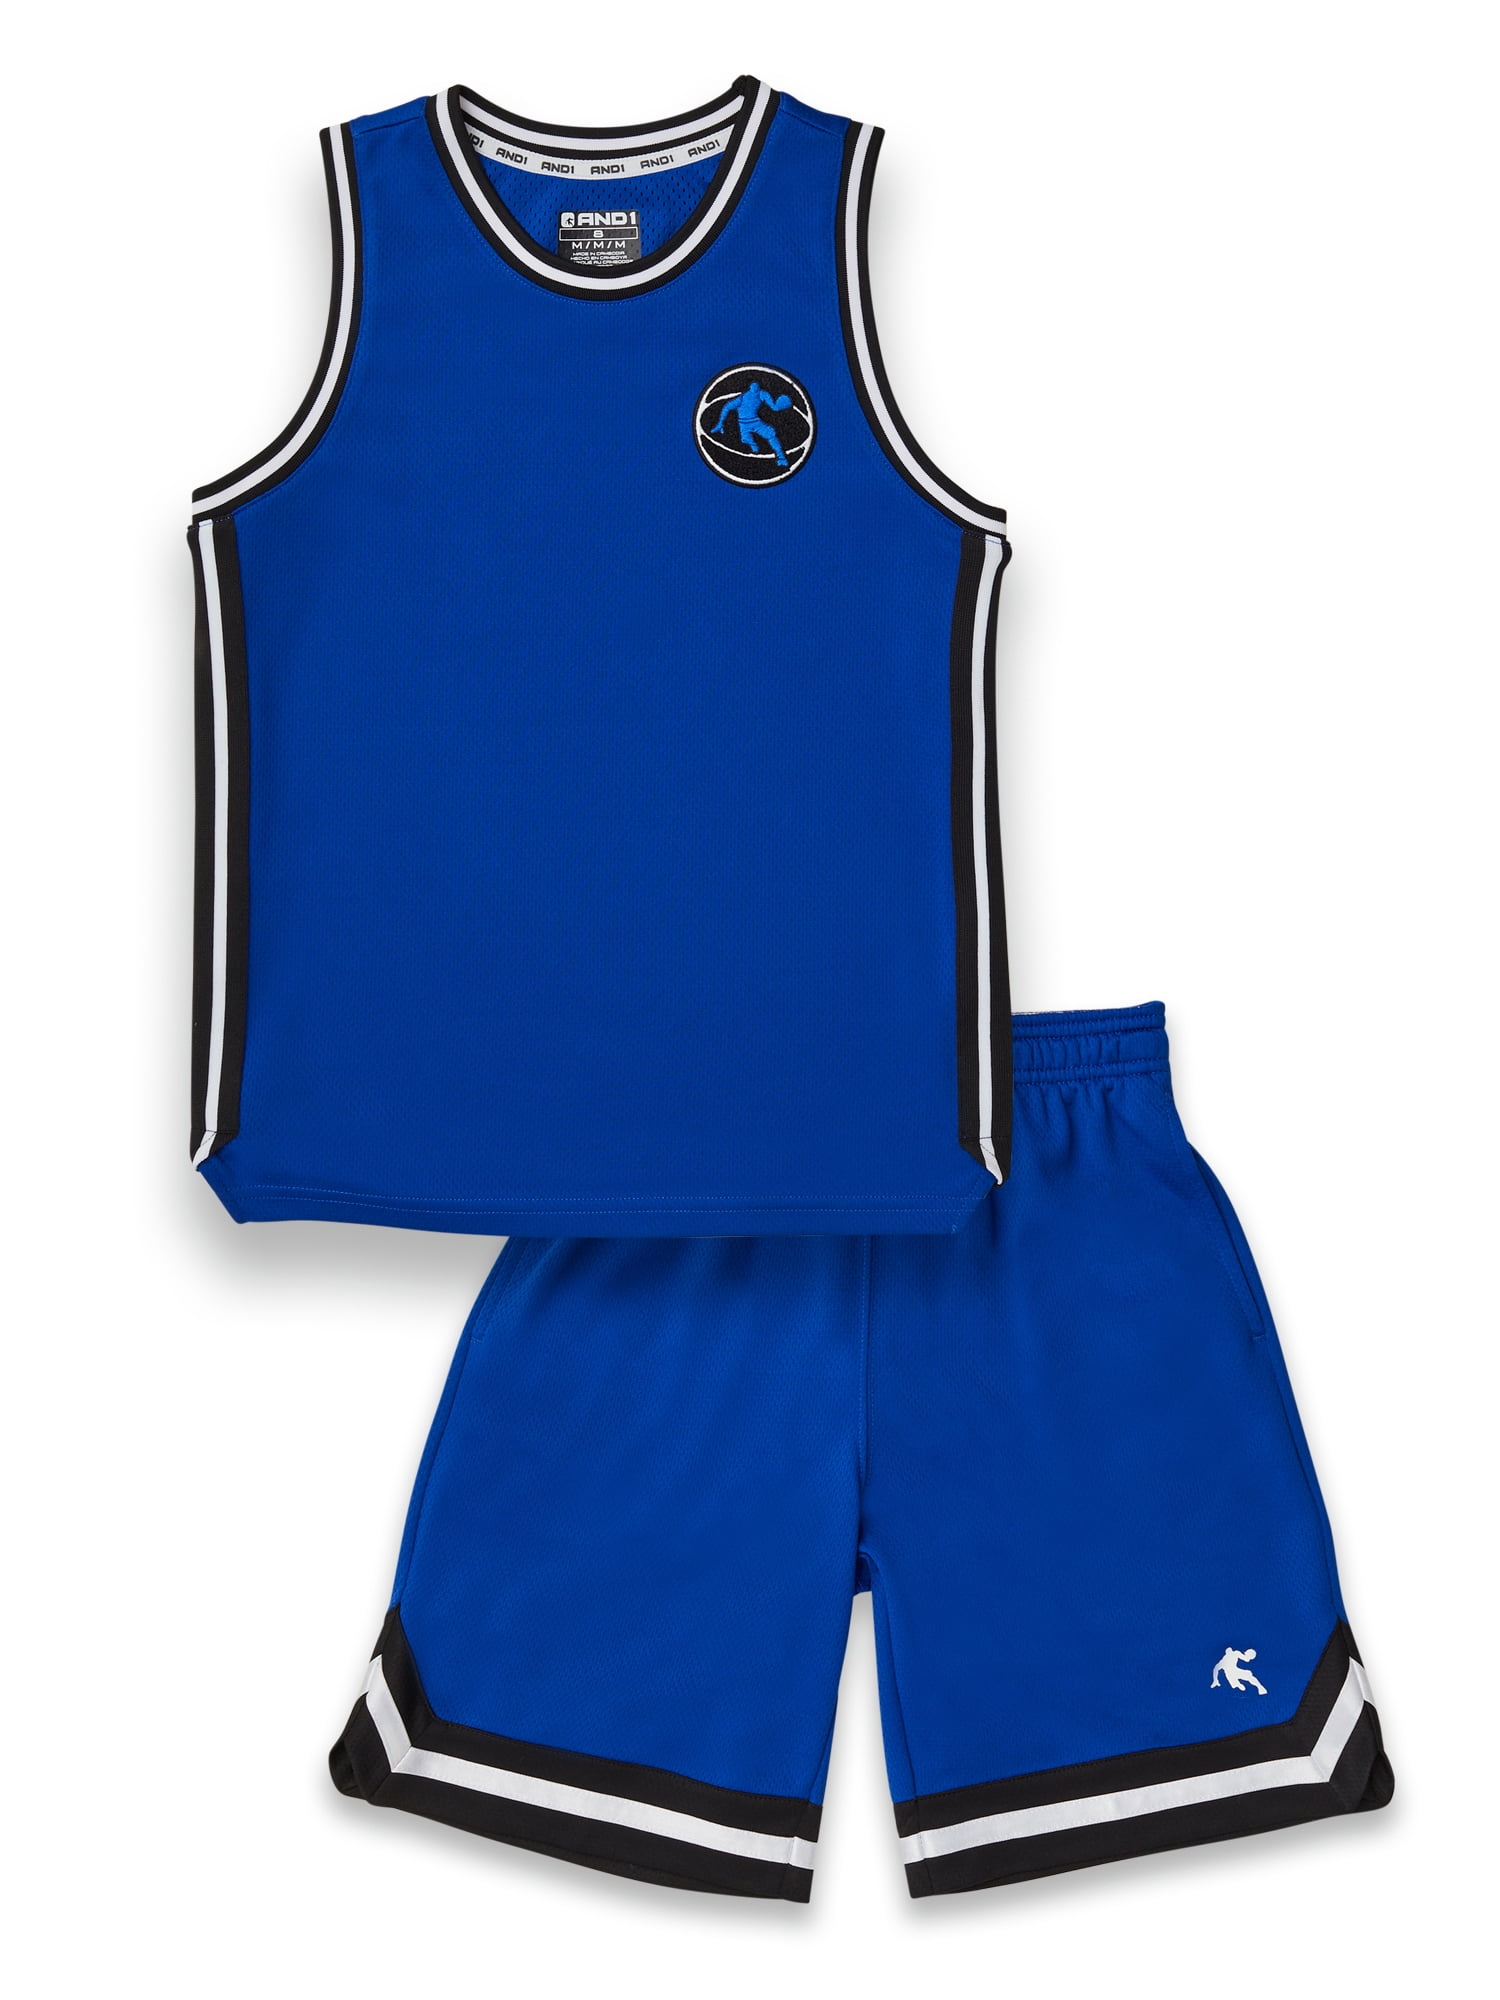 NBA Little Boys' 2-Piece Basketball Shorts Set/Outfit Size 4